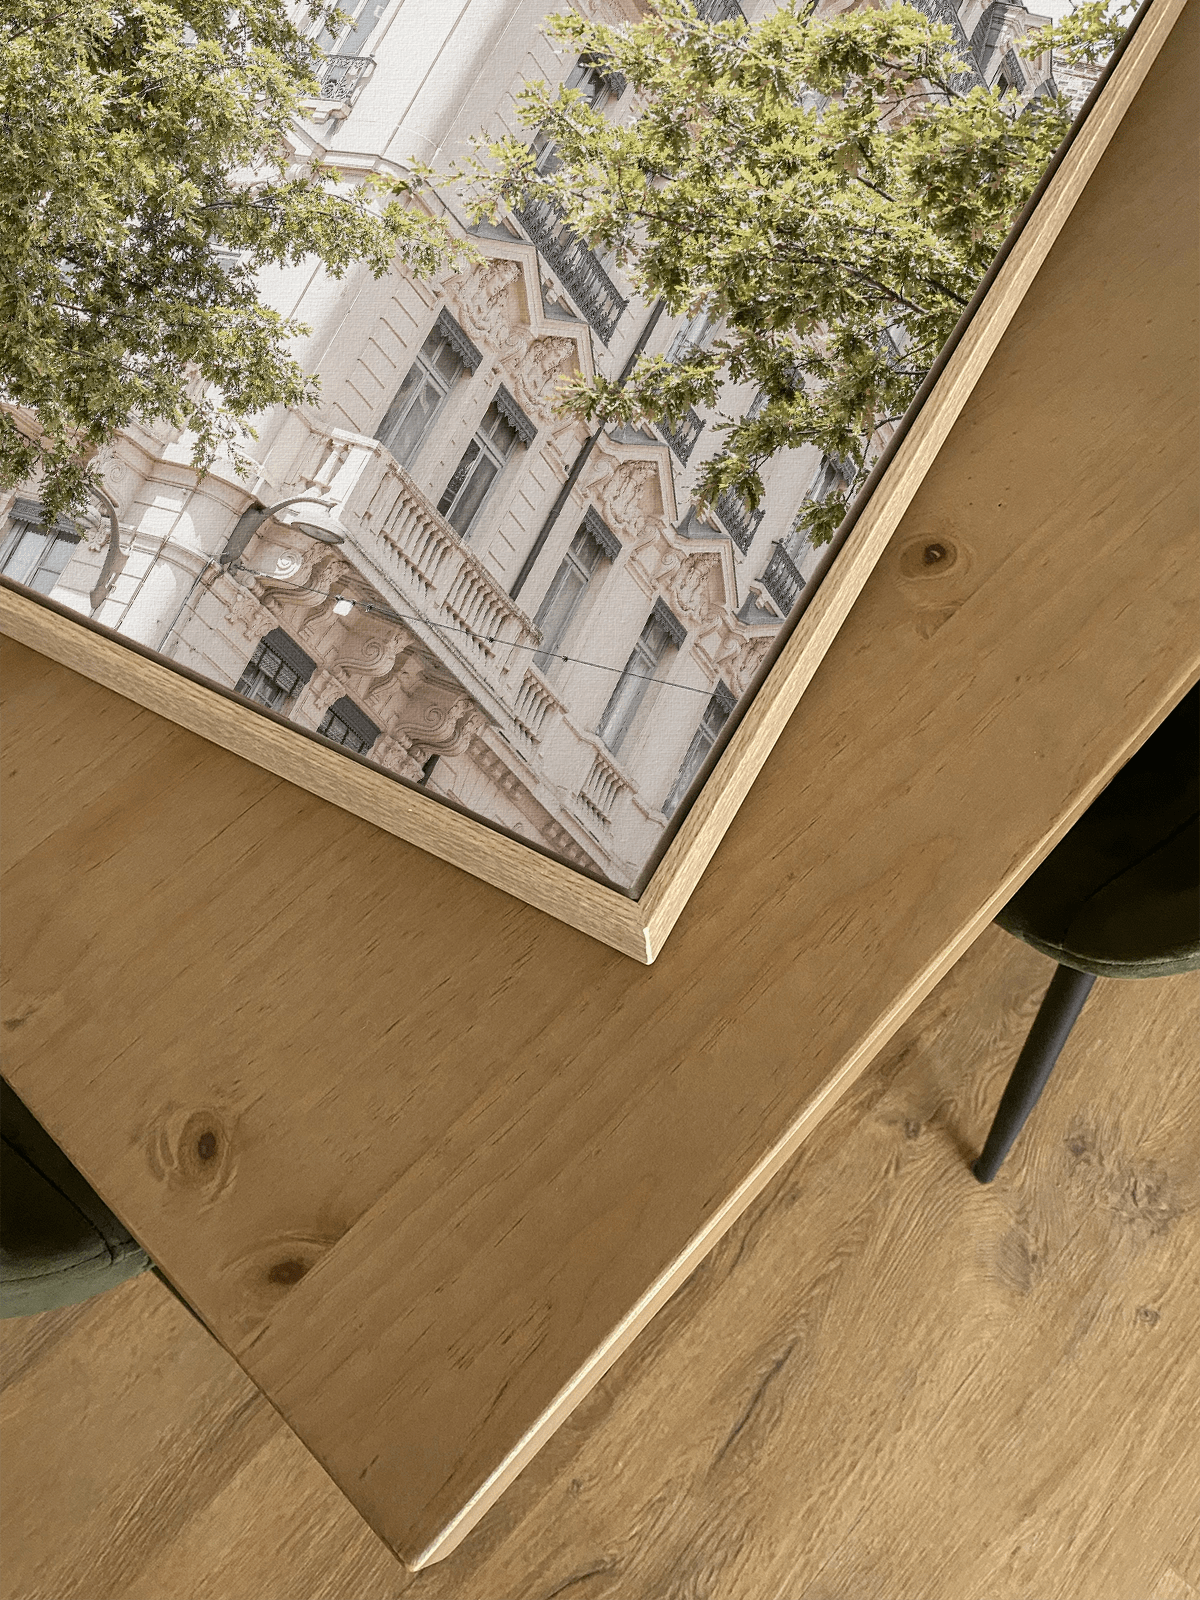 Parisian Summer - Lámina de Henrike Schenk - Decora tu casa en Nomadart